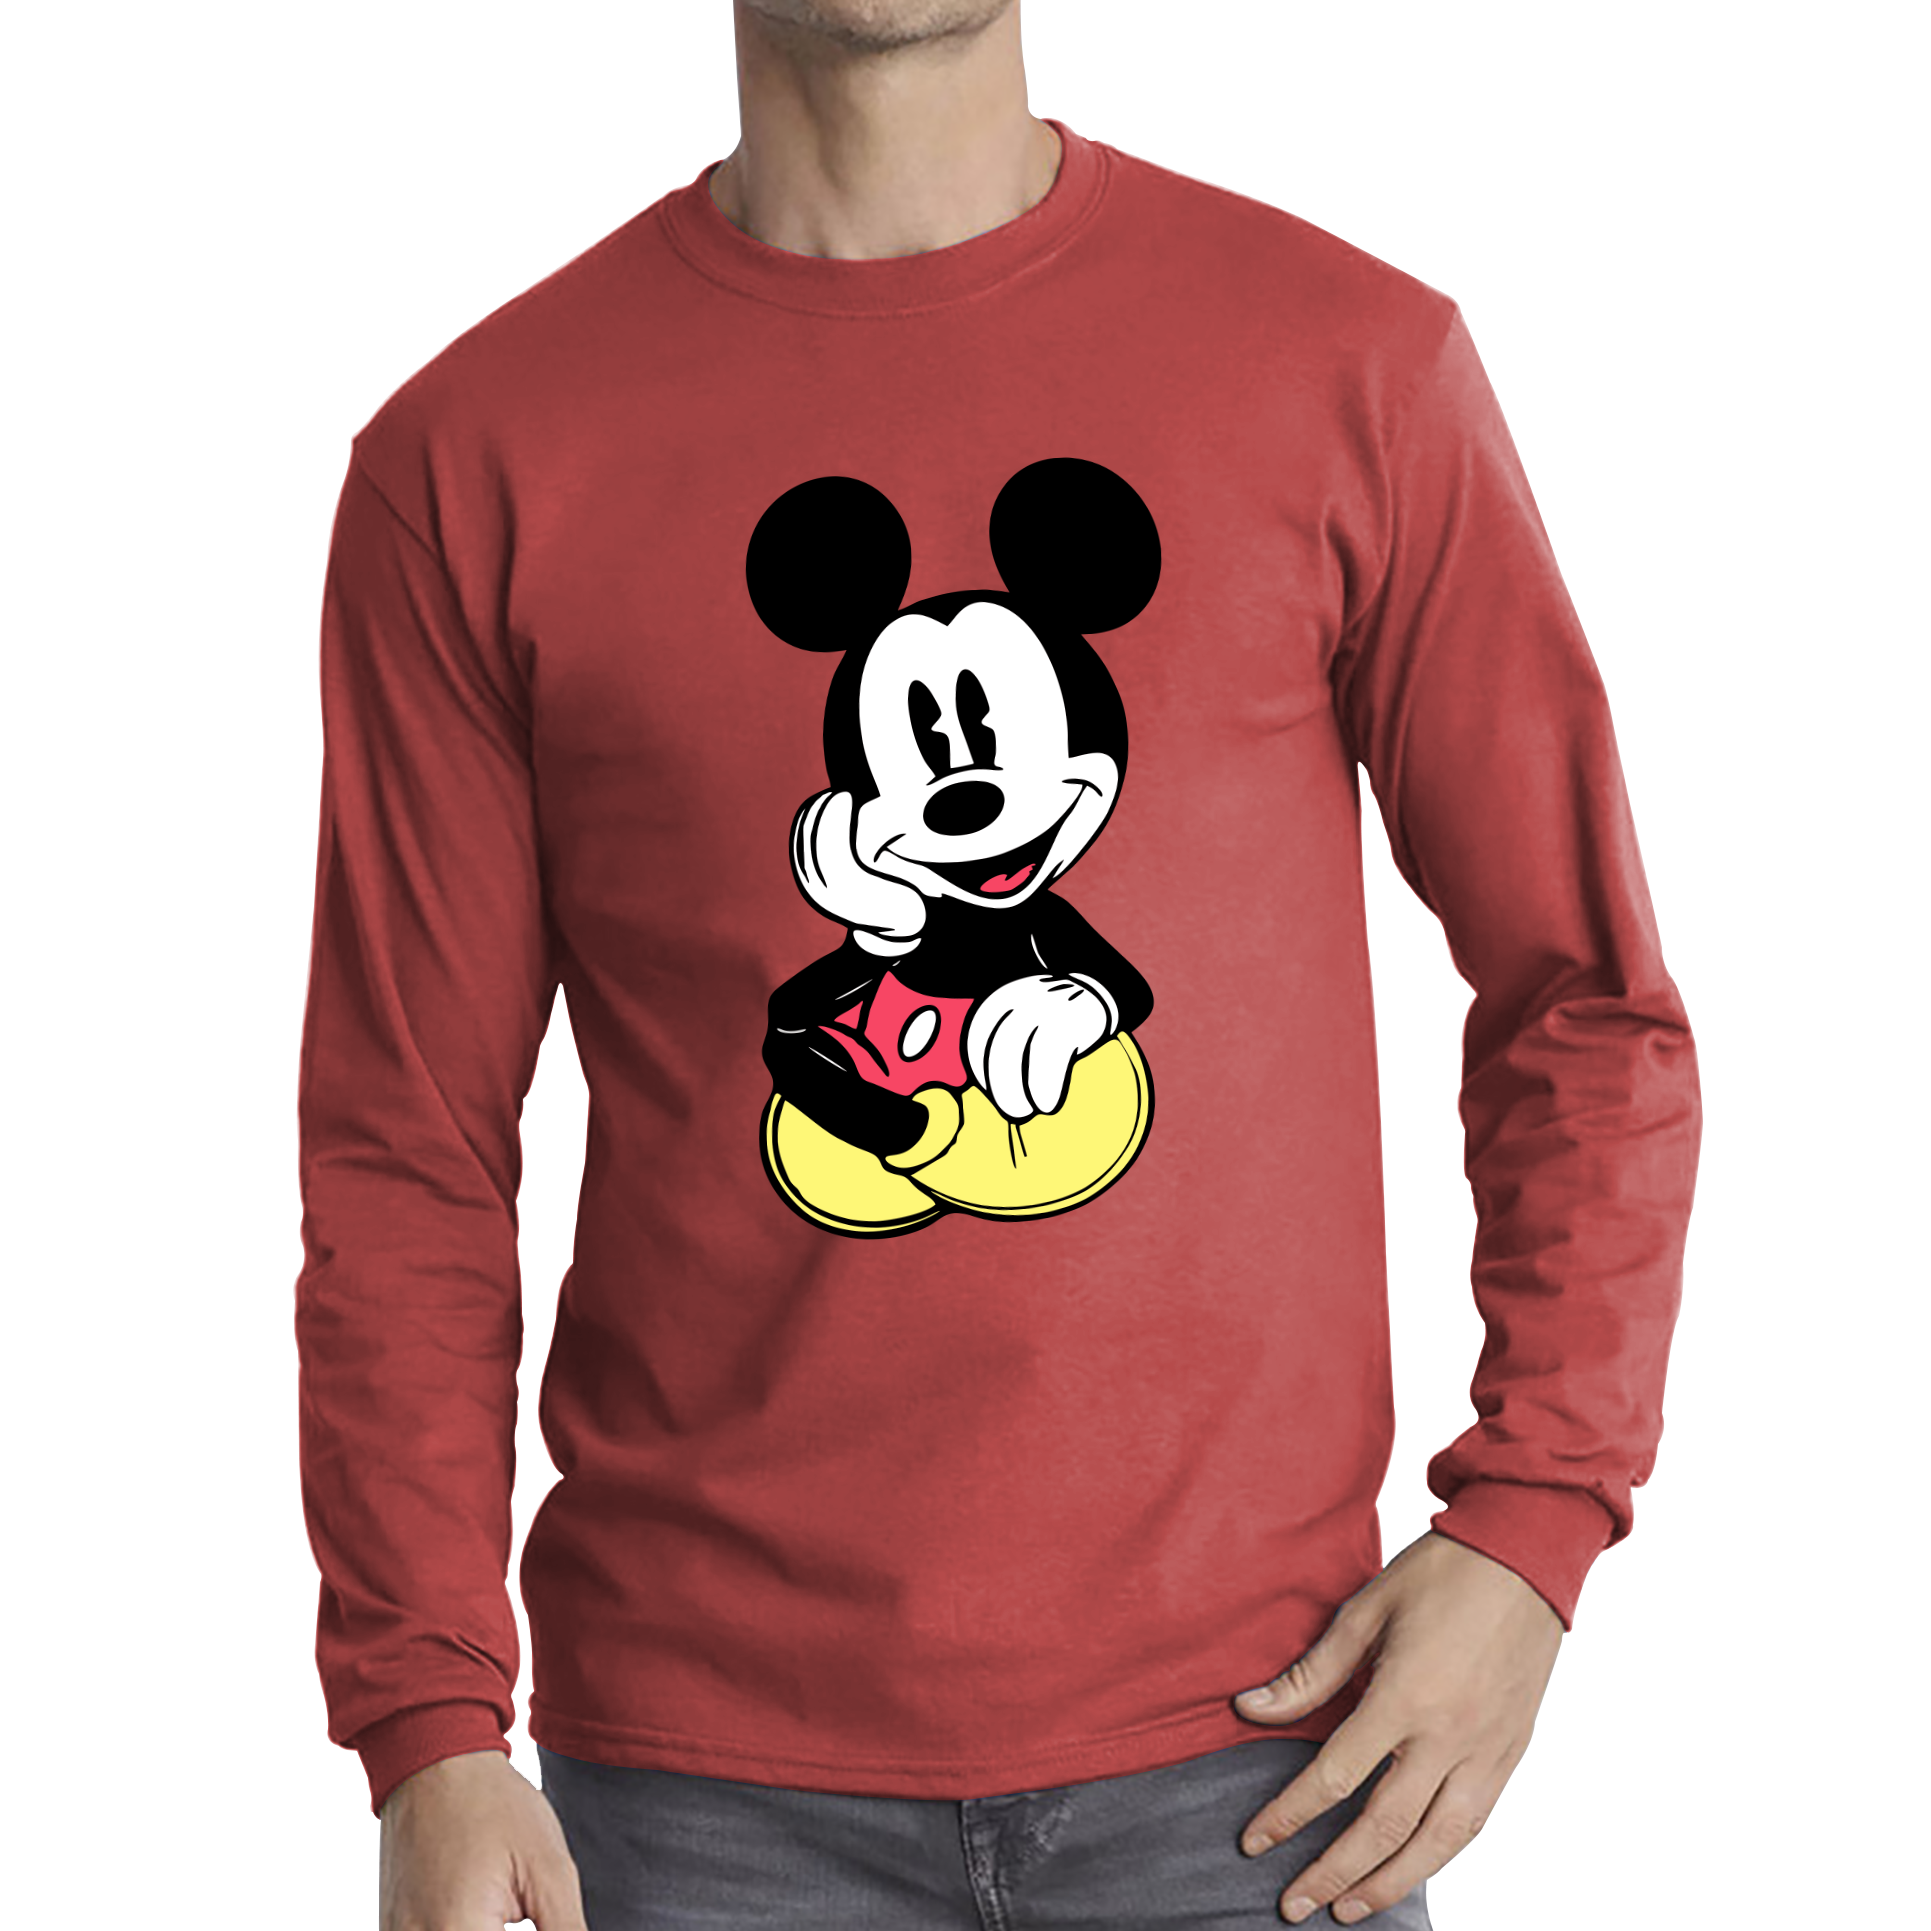 Disney Mickey Mouse Cute And Happy Cartoon Character Disney World Walt Disney Long Sleeve T Shirt